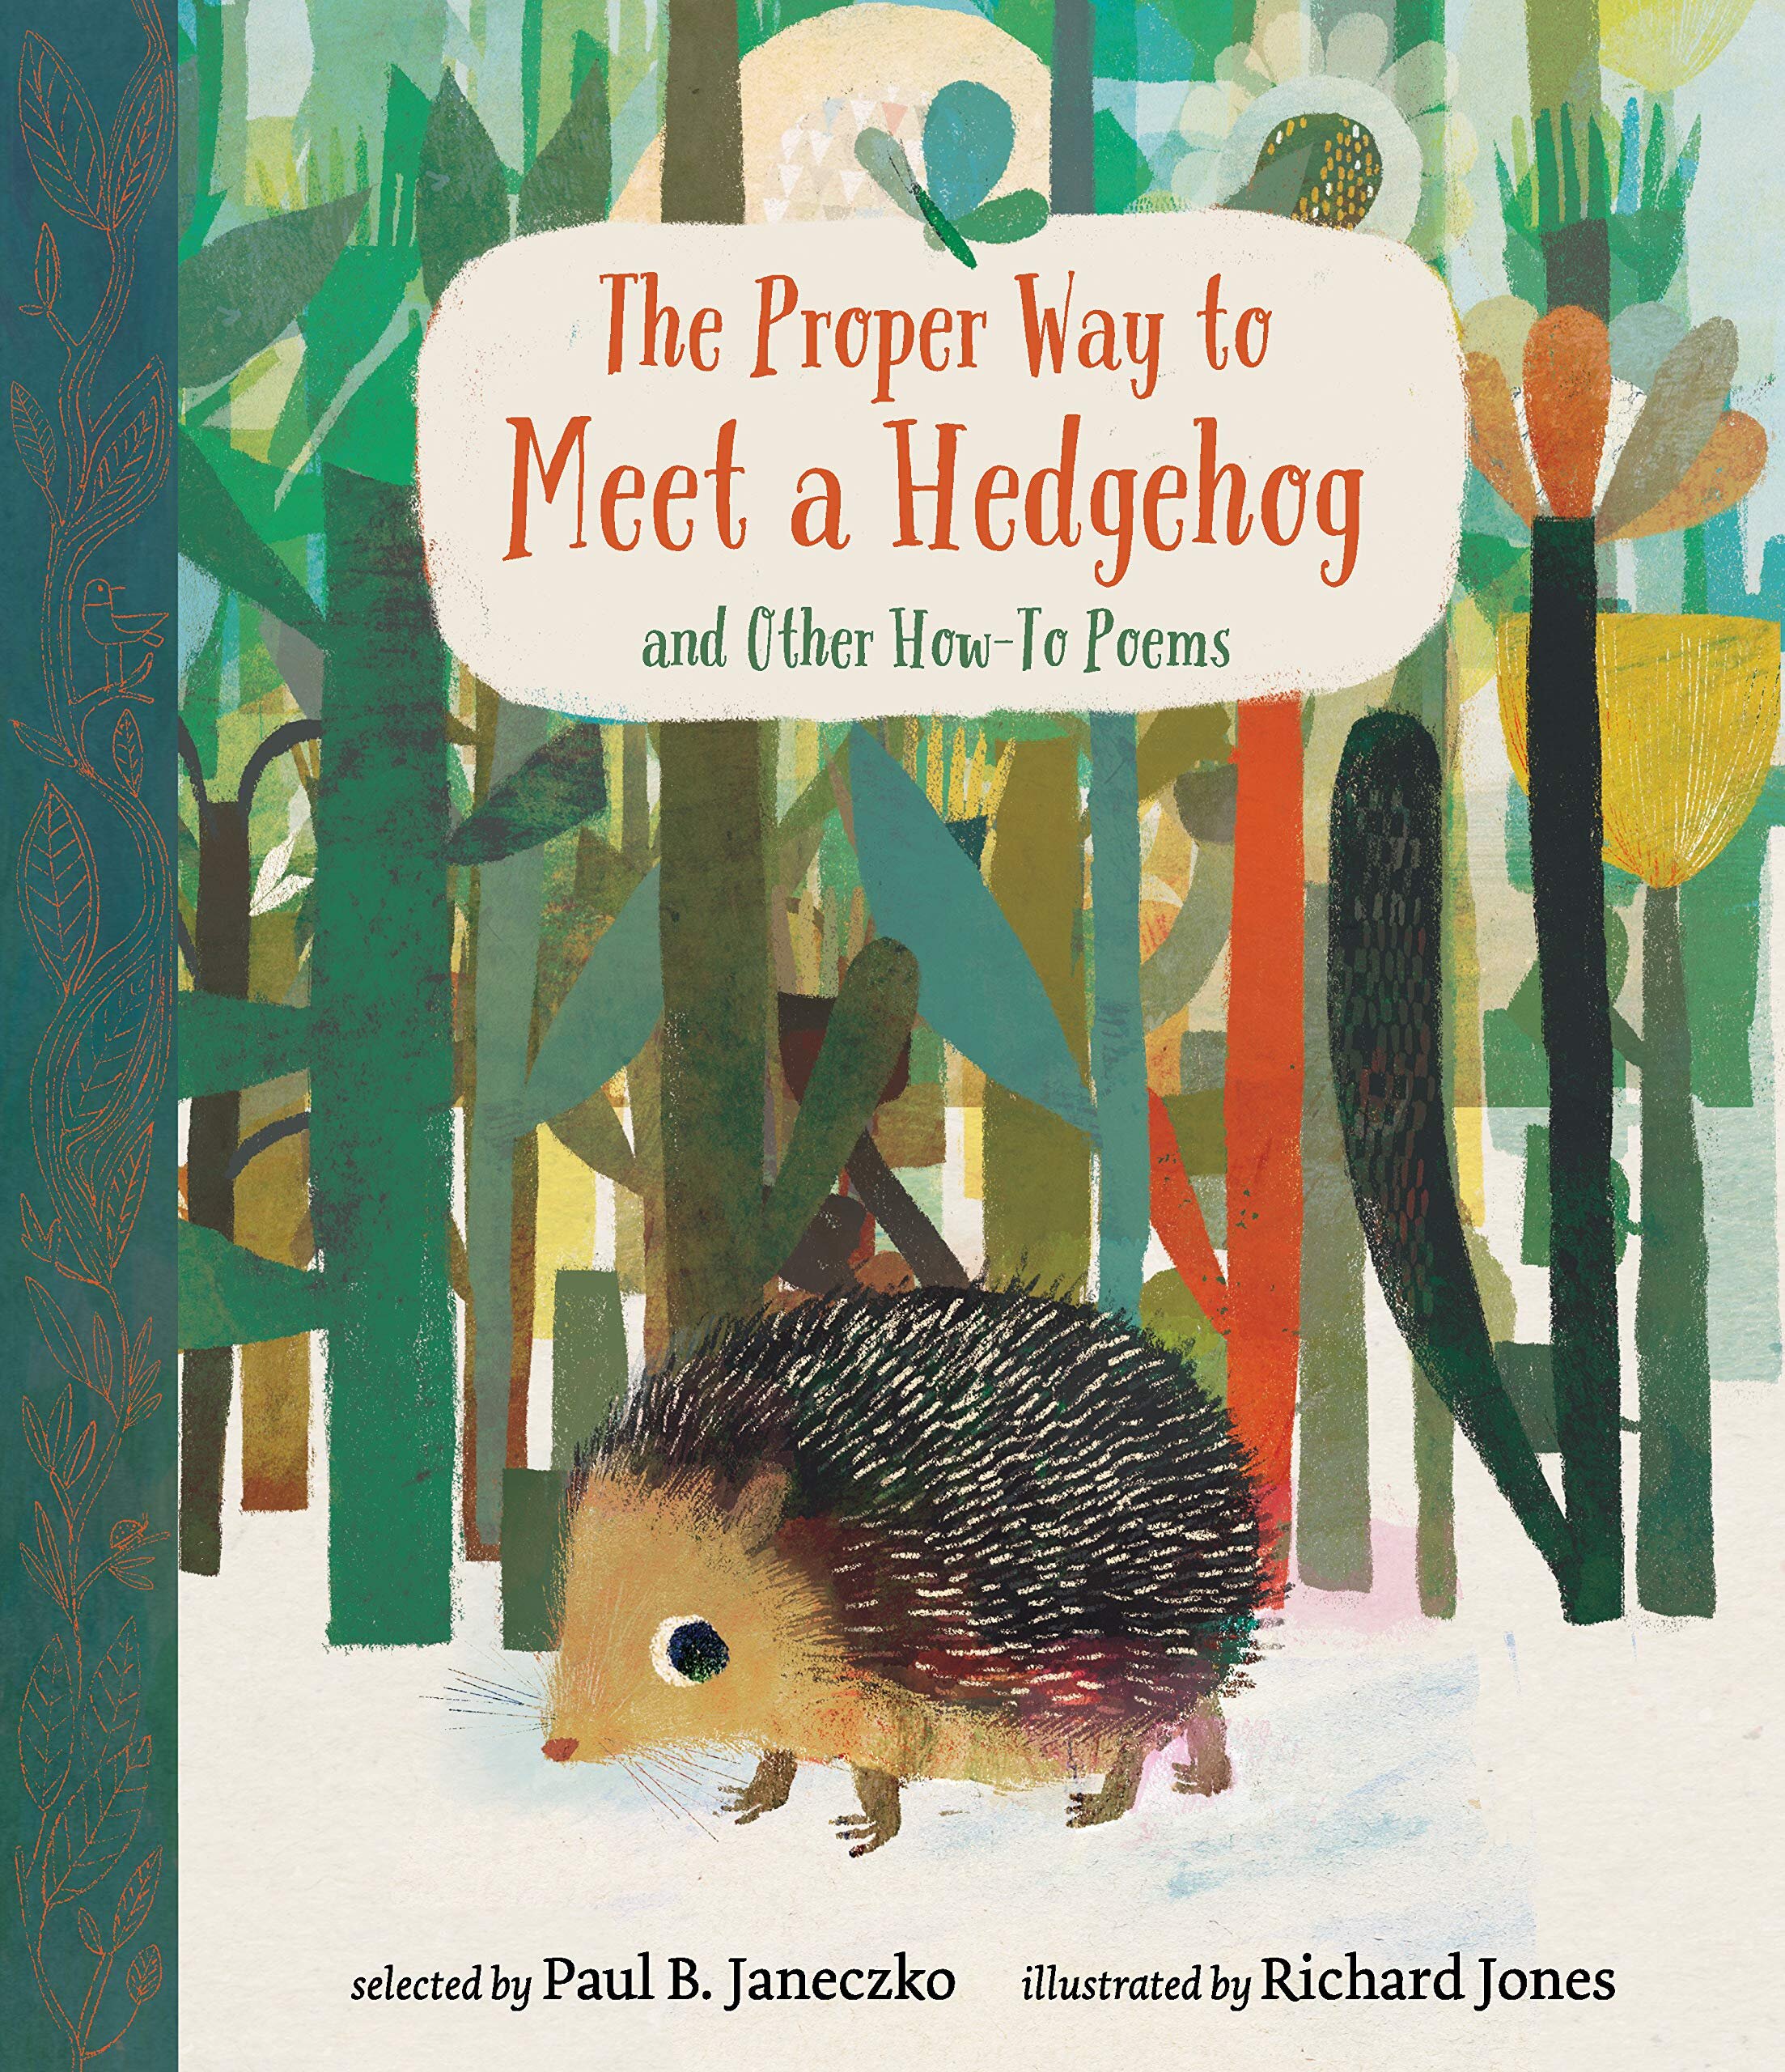 The Proper Way to Meet a Hedgehog - Paul B. Janeczko